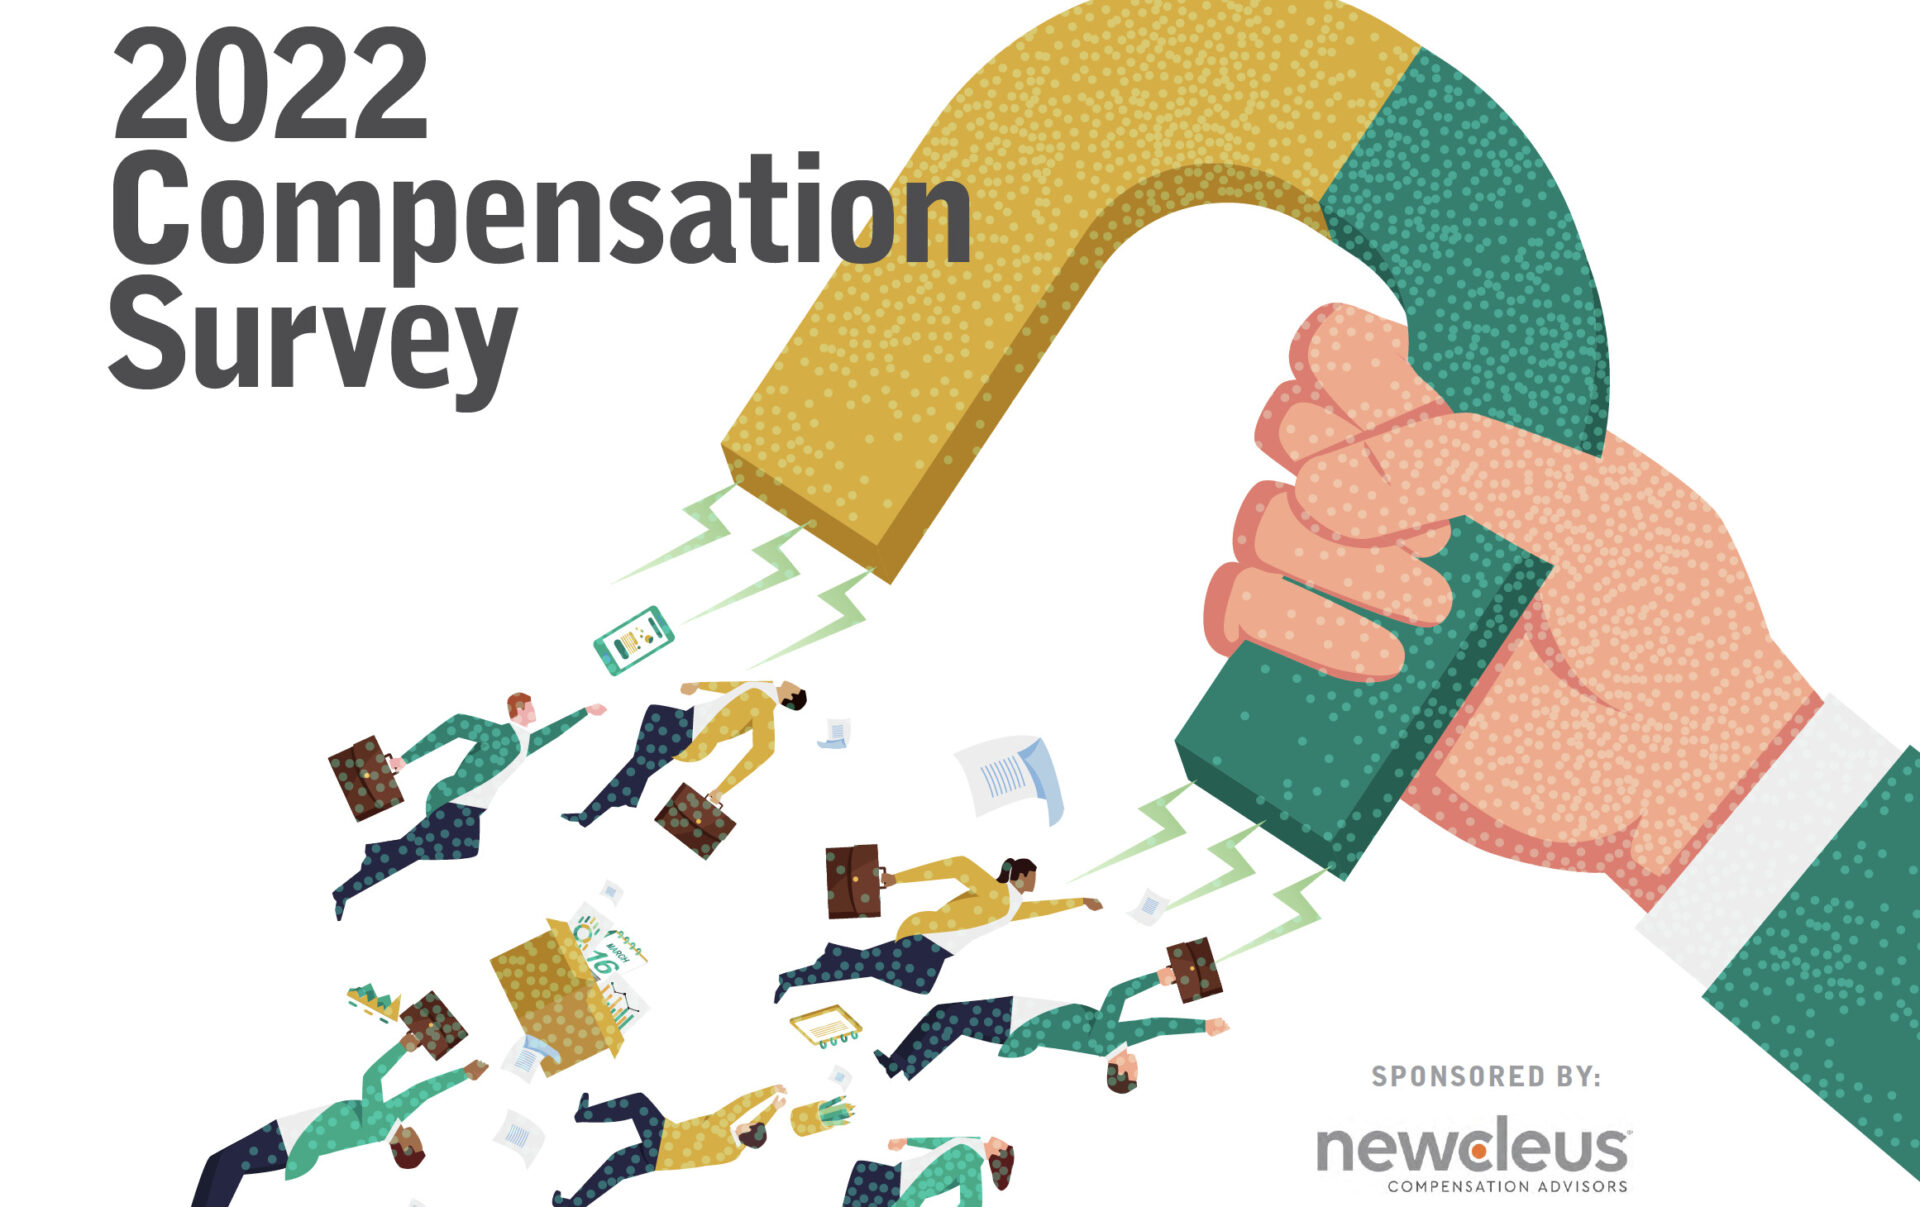 2022 Compensation Survey sponsored by Newcleus